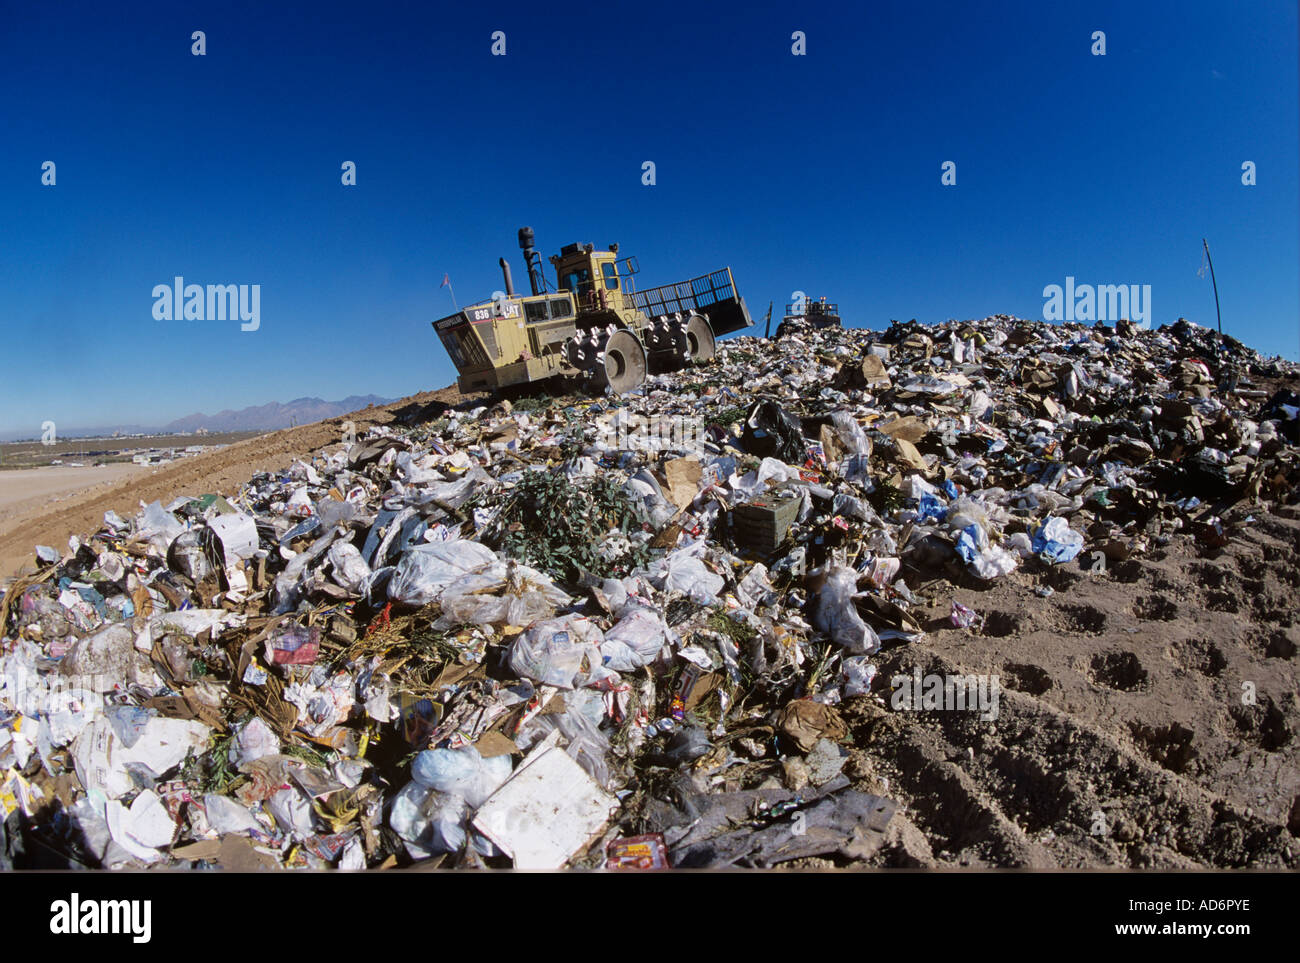 A large Cat plows trash at a landfill Stock Photo